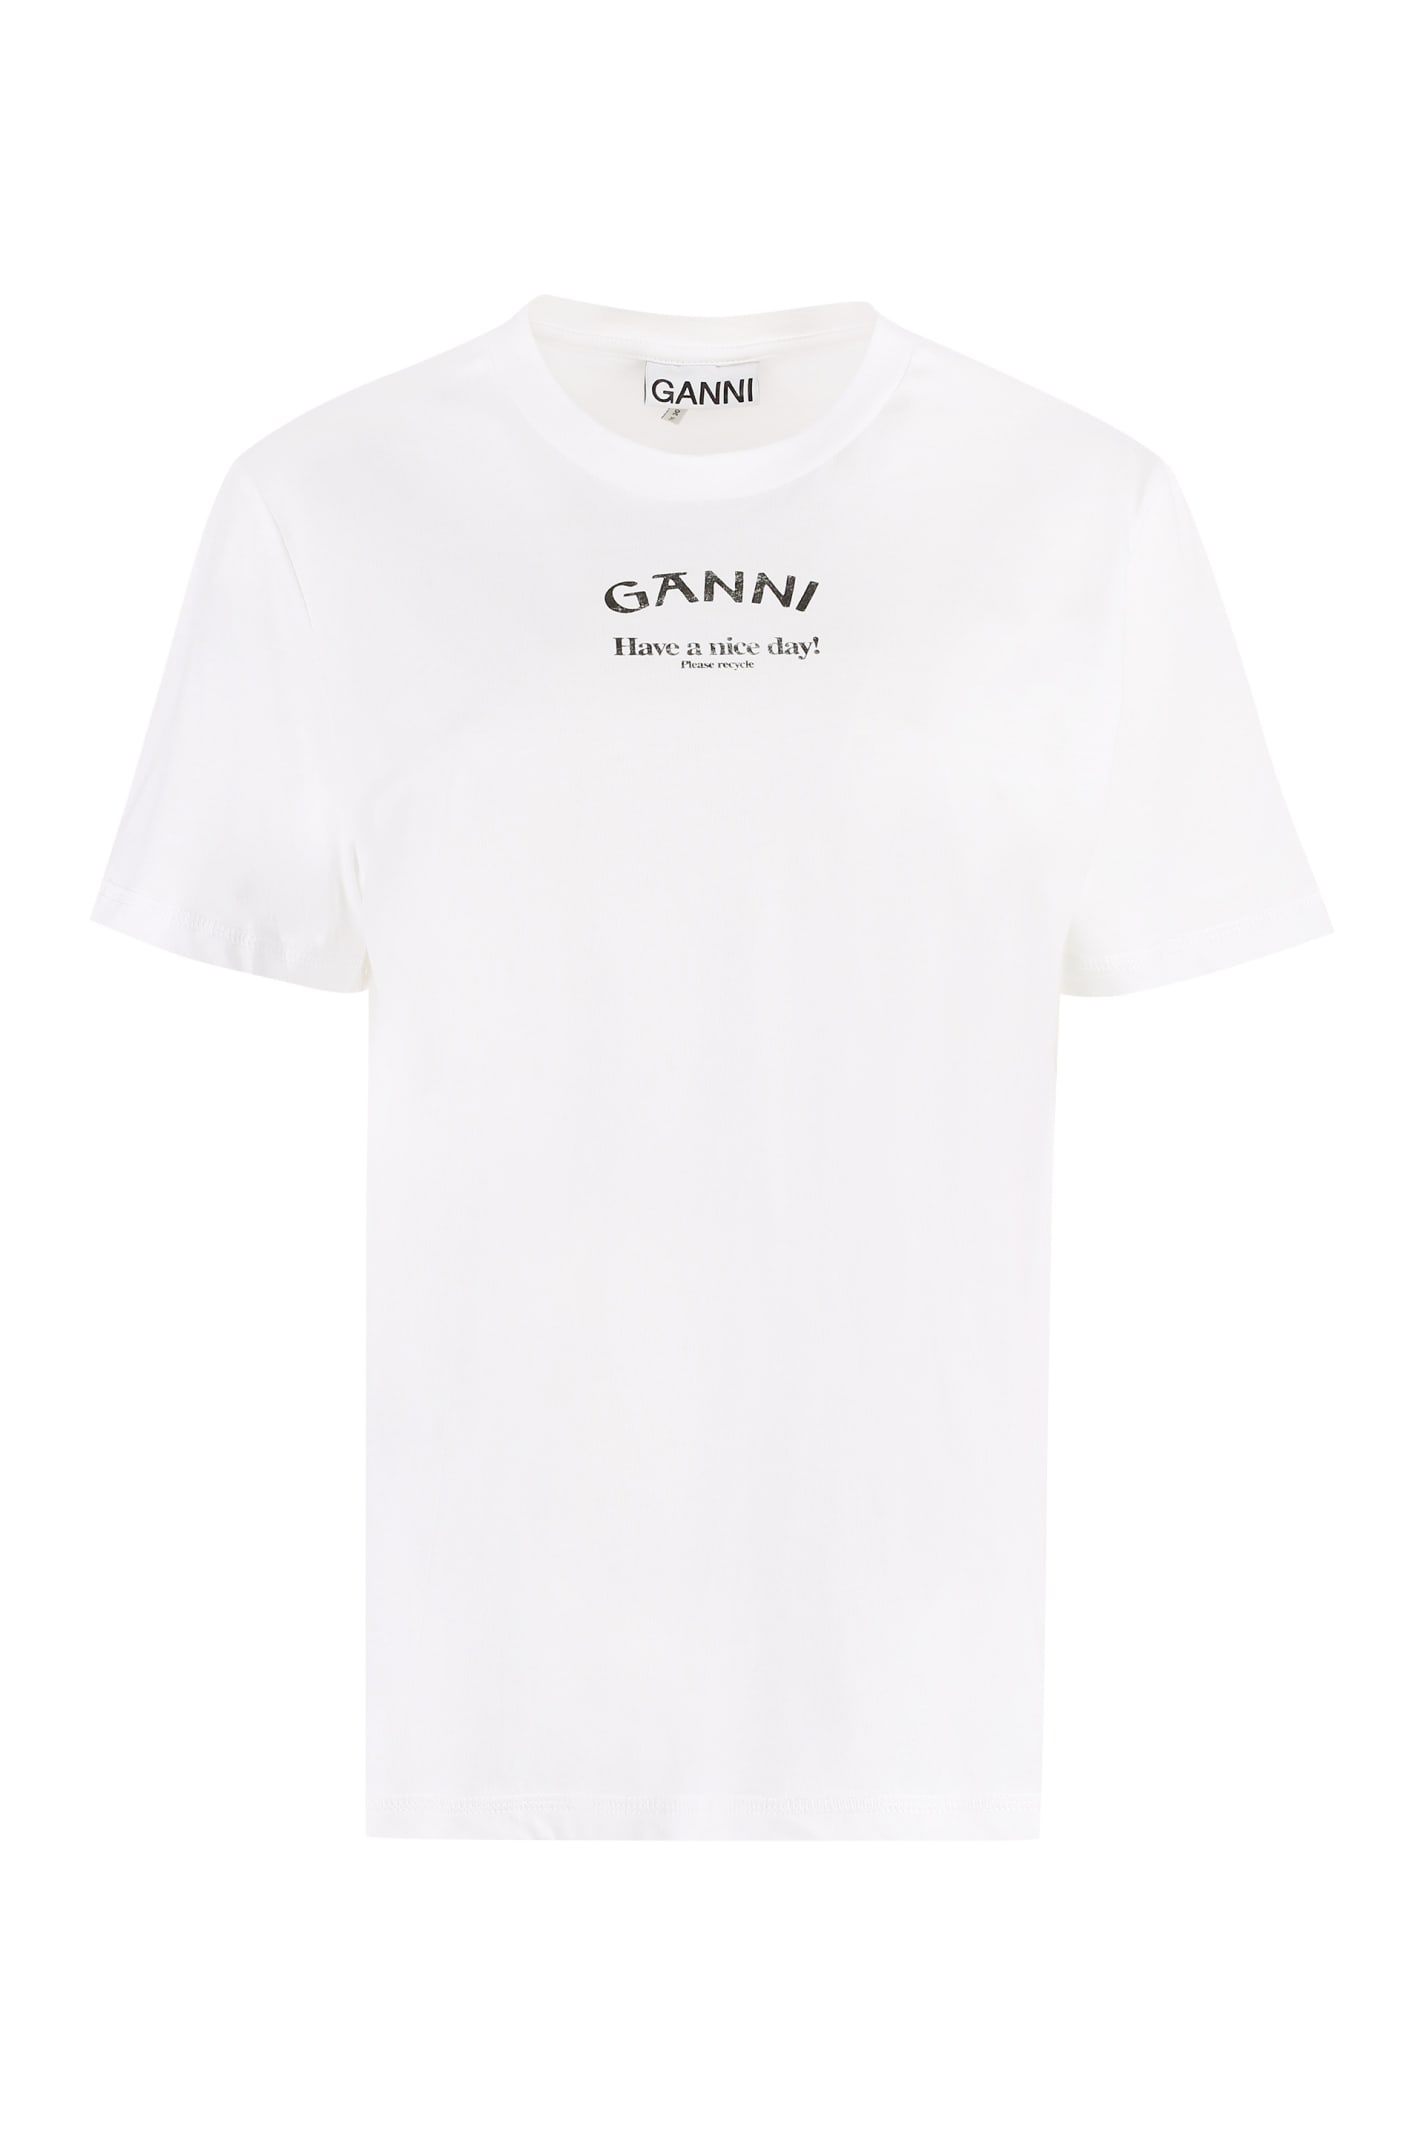 Ganni Printed Cotton T-shirt